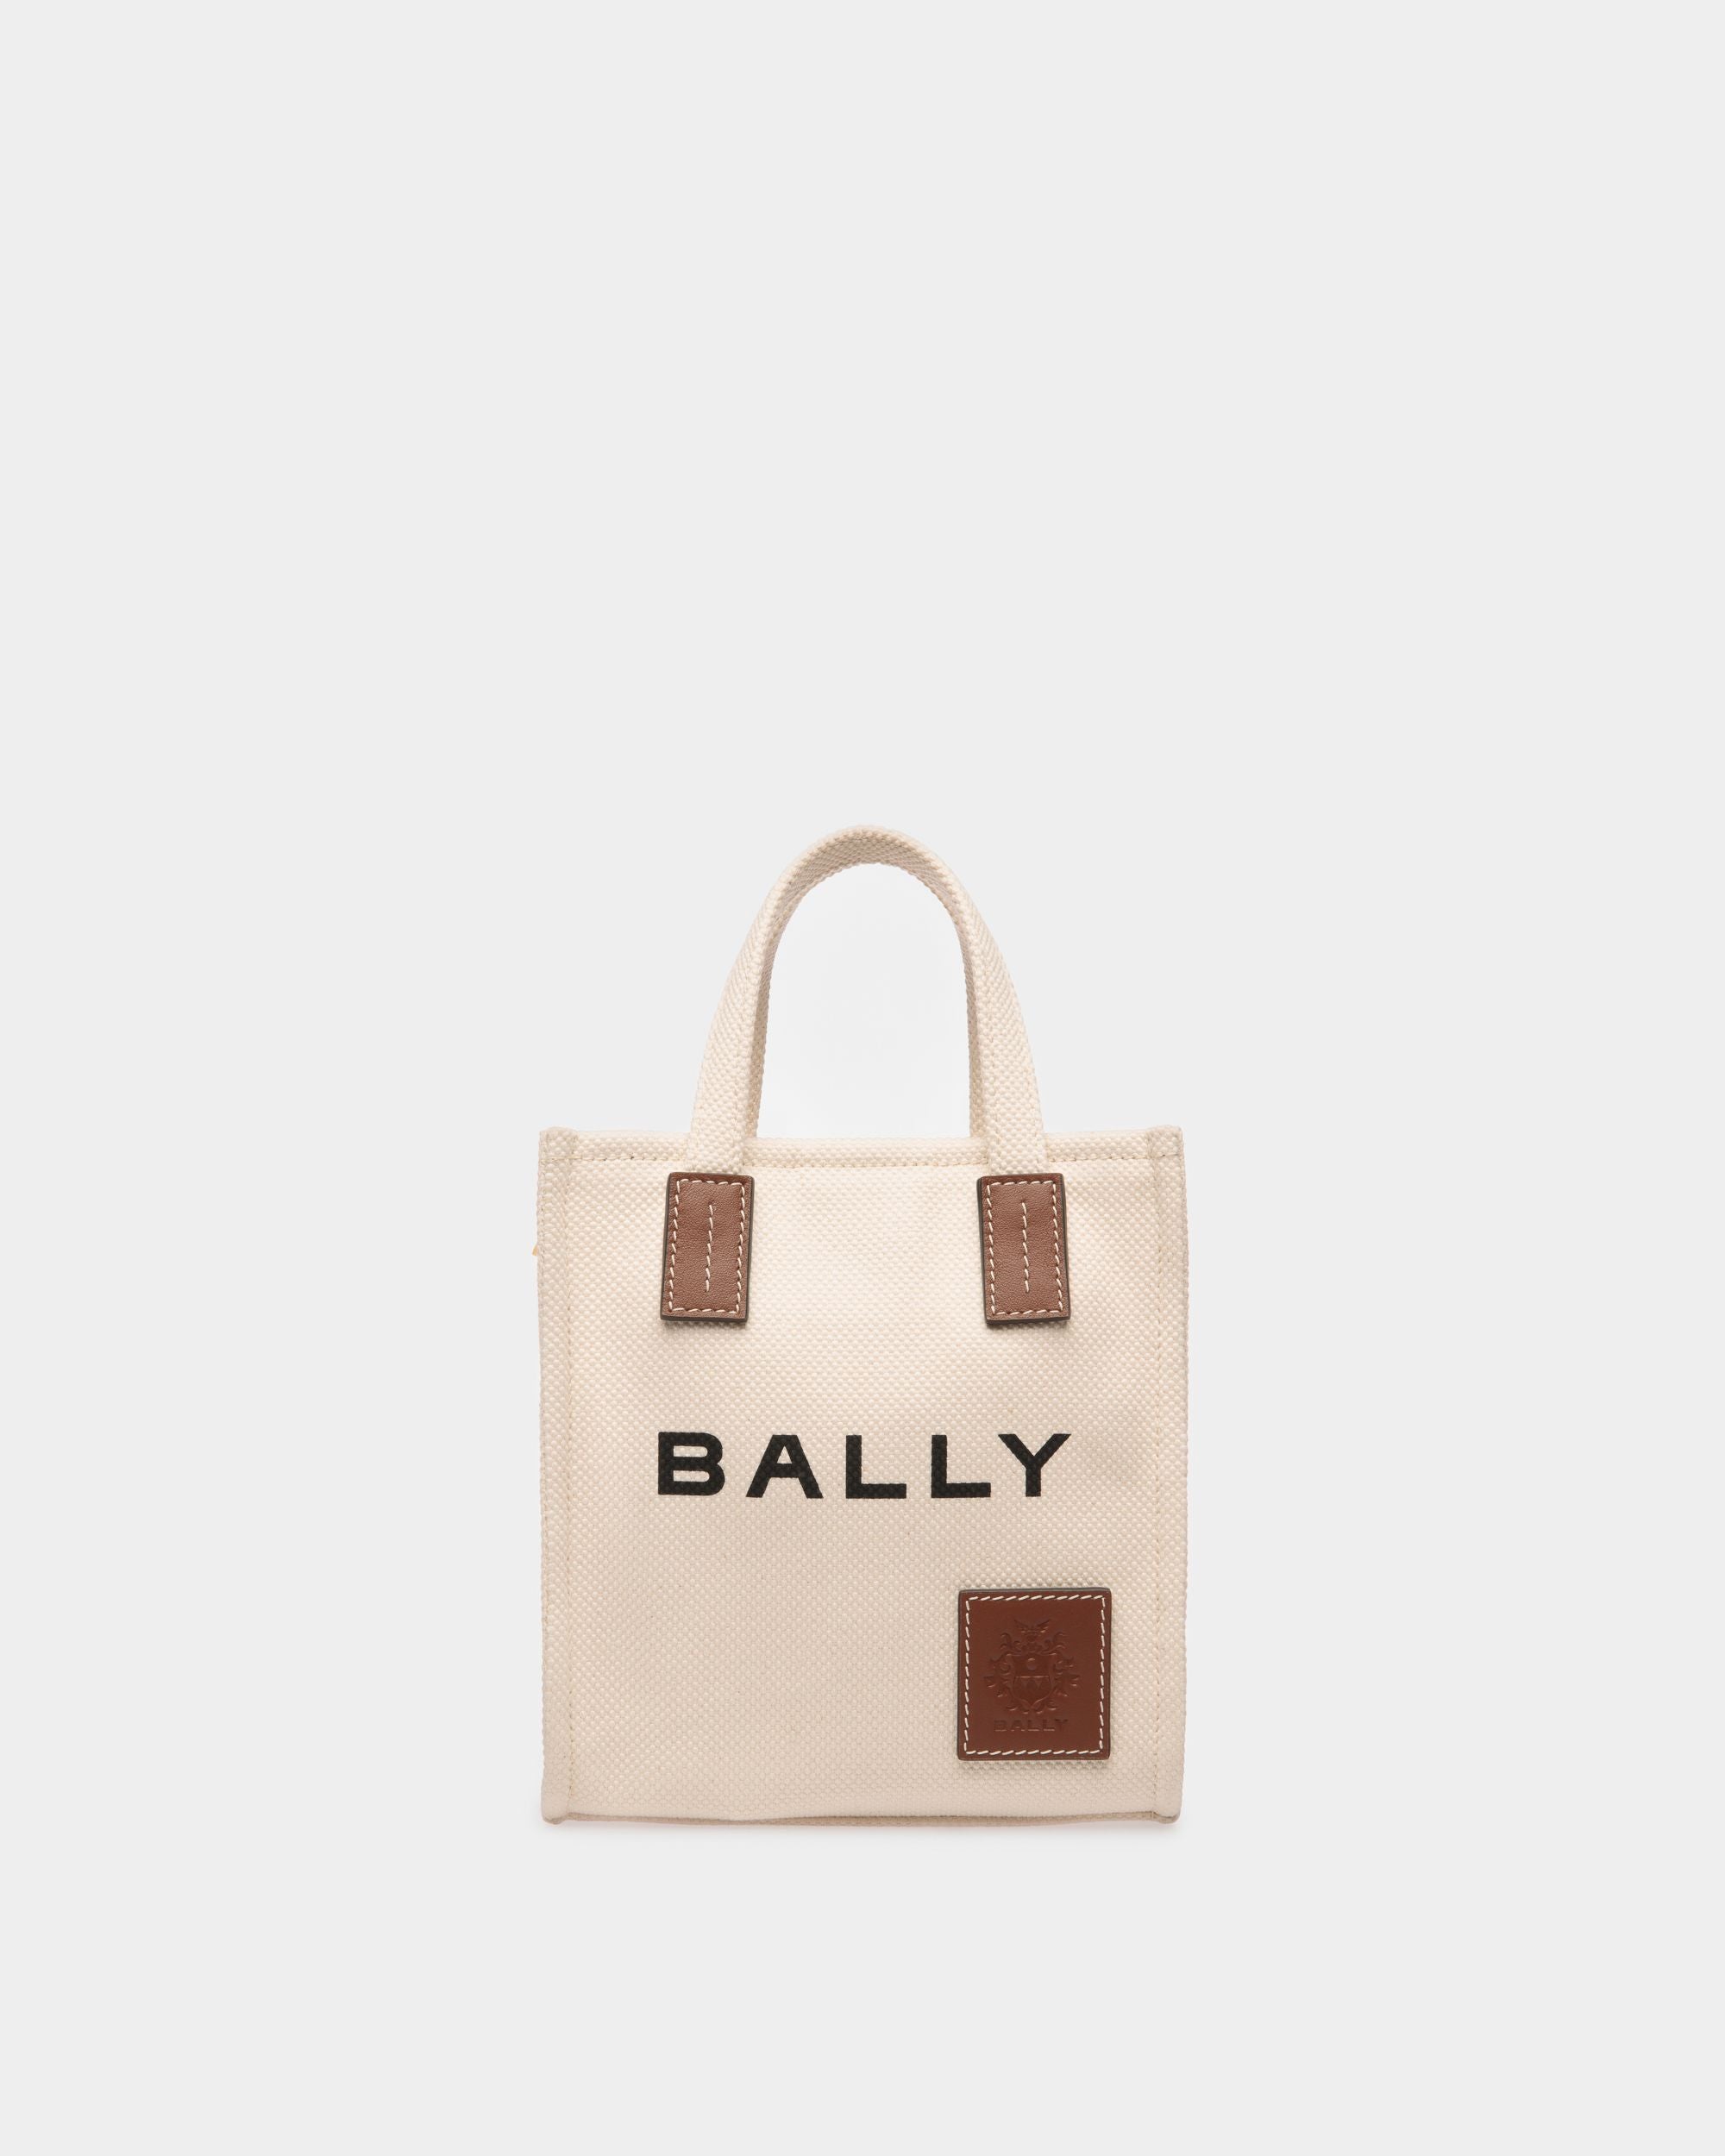 Akelei | Mini sac cabas pour femme en toile neutre | Bally | Still Life Devant